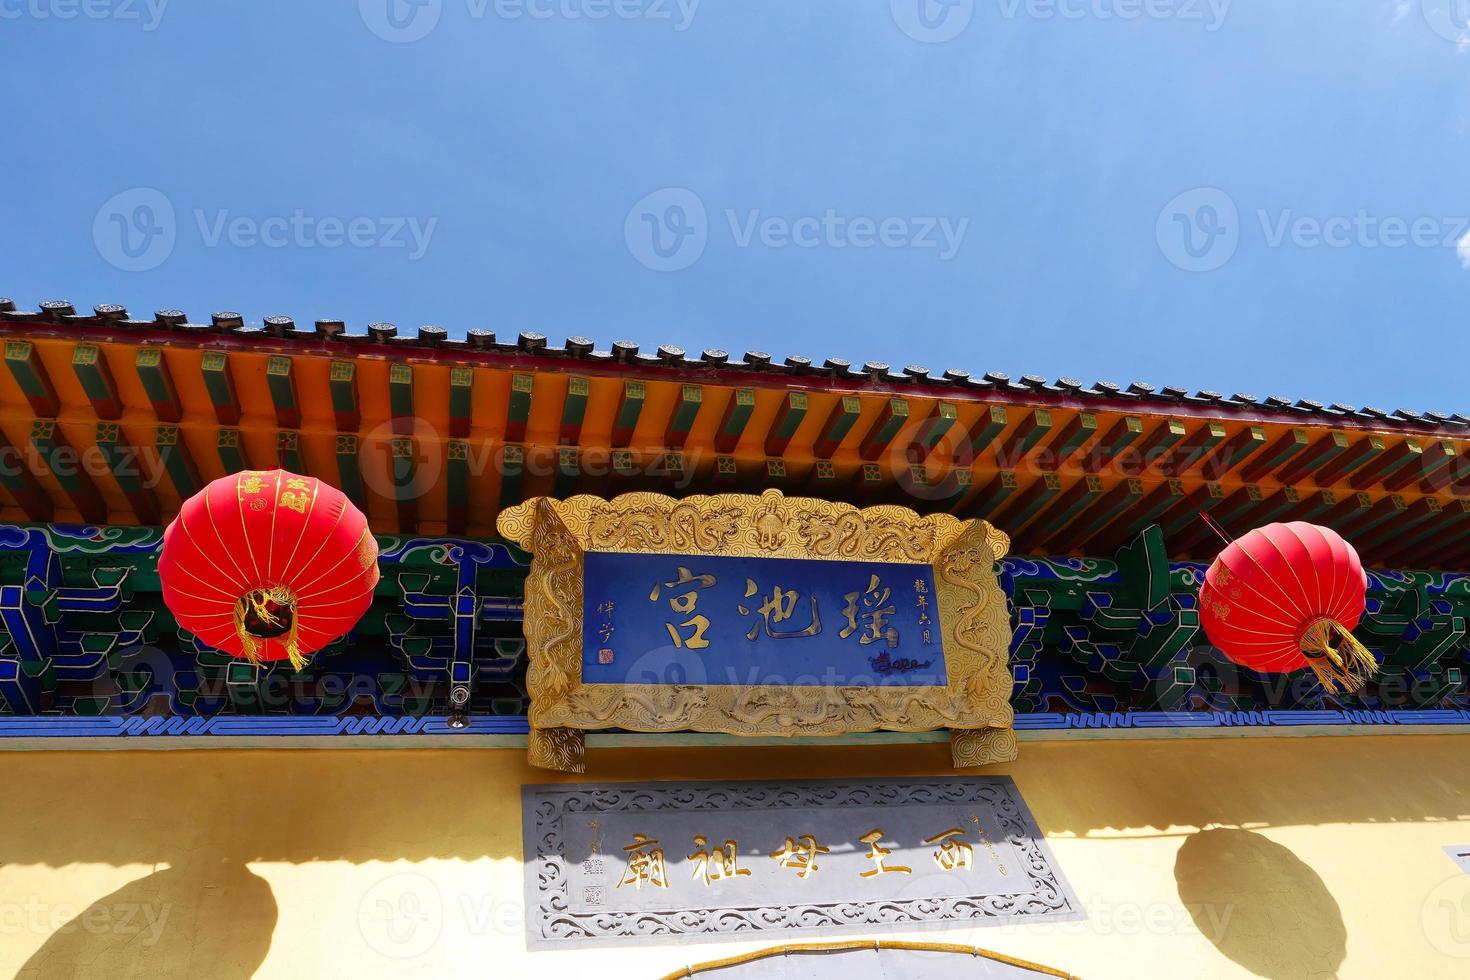 taoïstische hemelse koningin-moedertempel in xinjiang, china foto